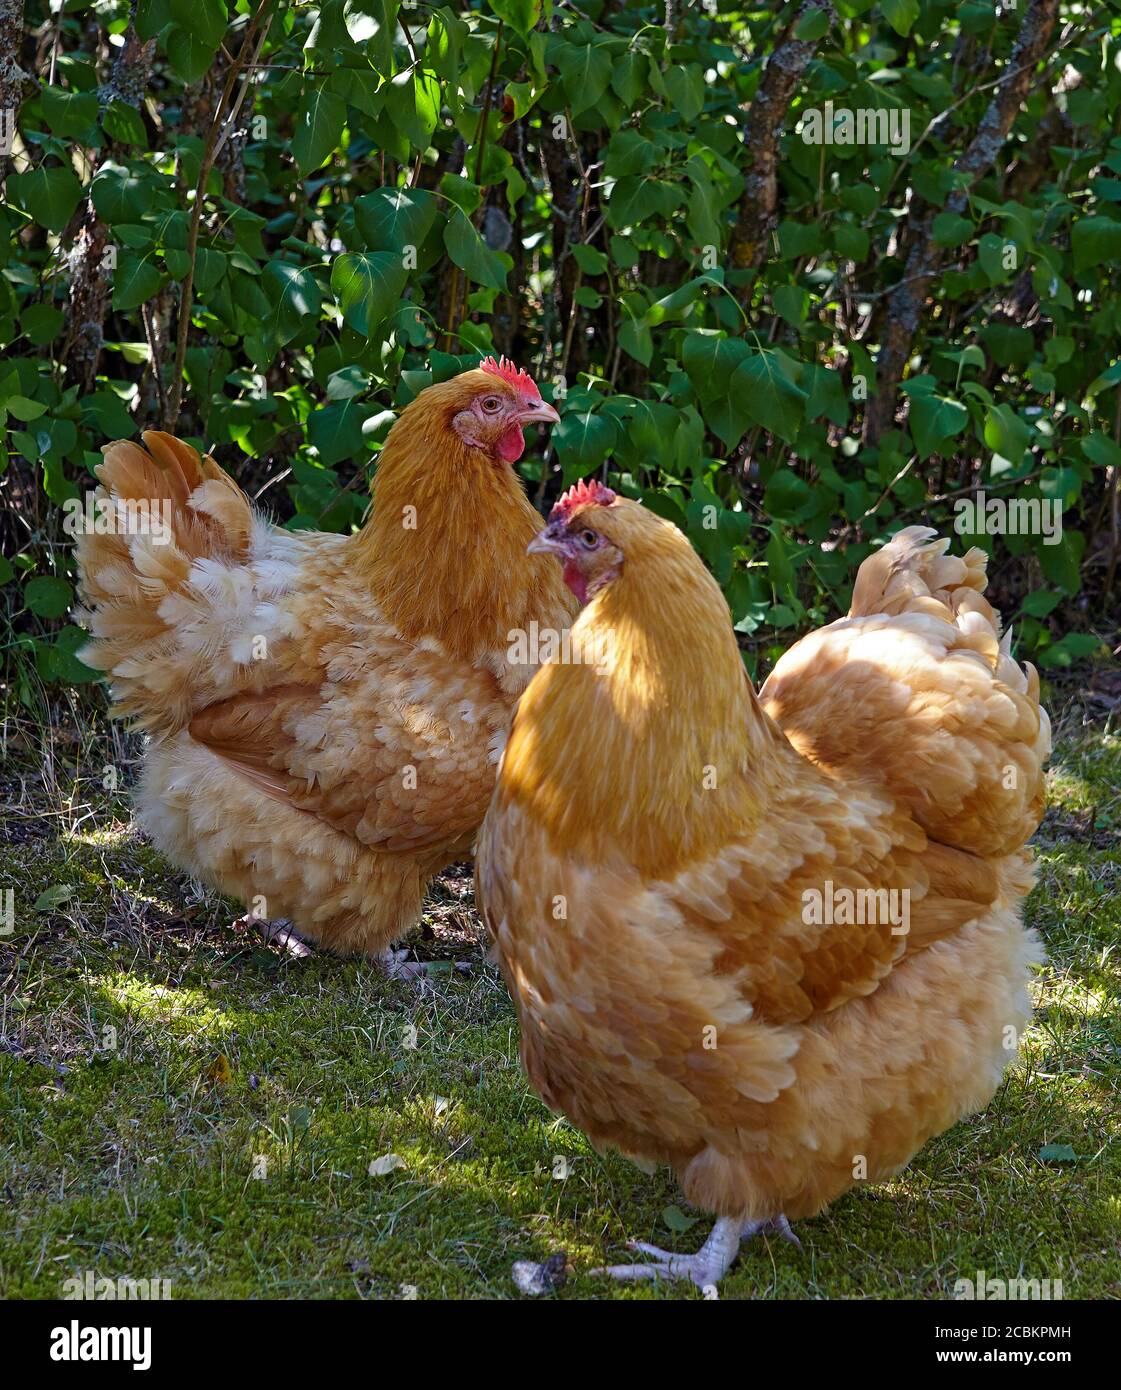 Gallina de pollo orpington en un jardín. Malmkoping suecia Foto de stock